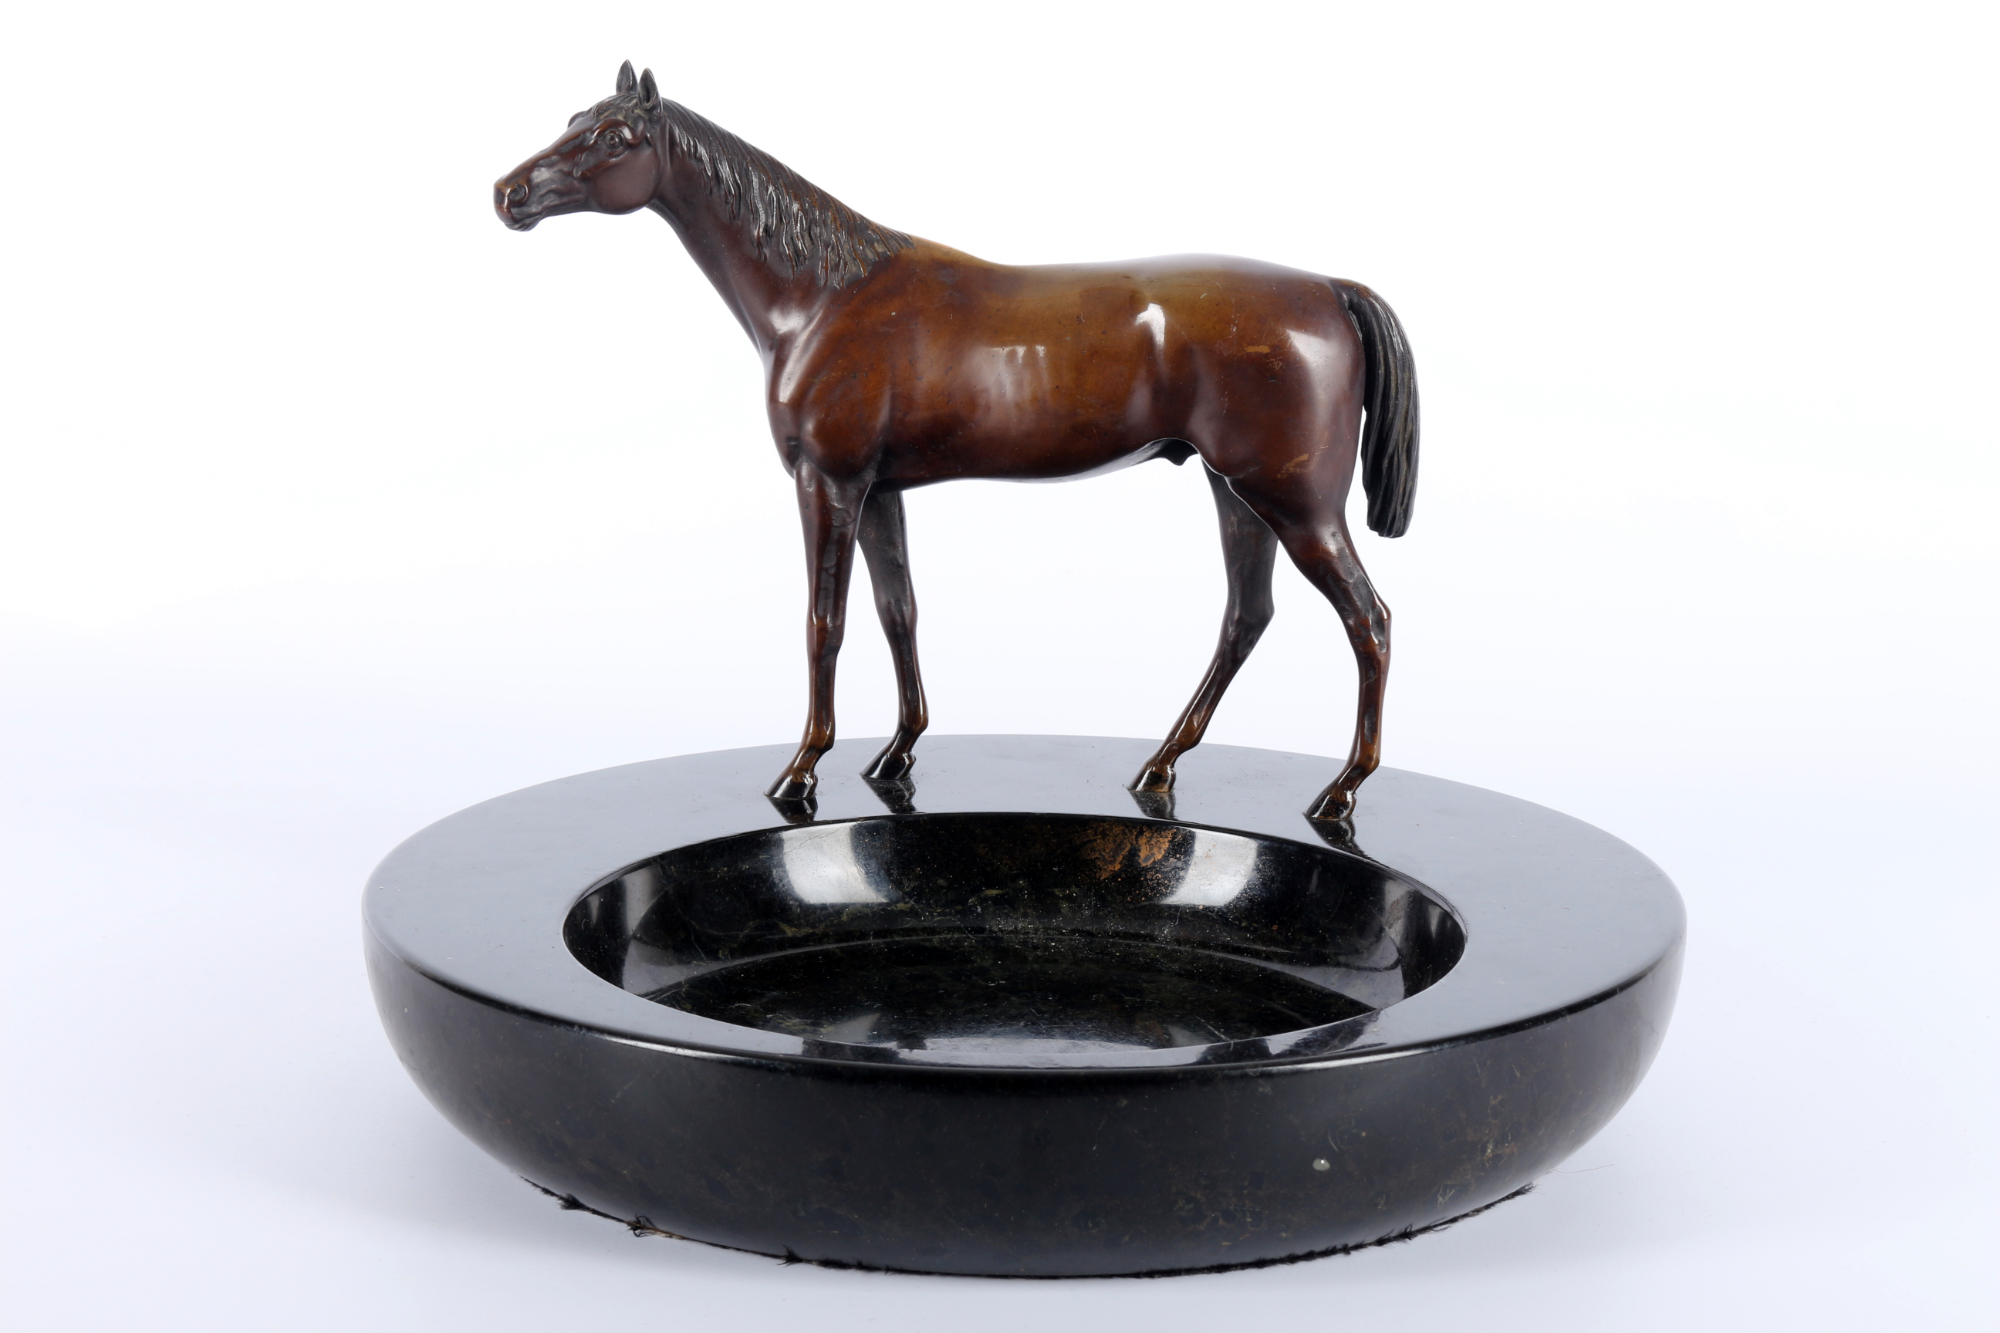 Large marble bowl with bronze horse, große Marmorschale mit Bronze Pferd,